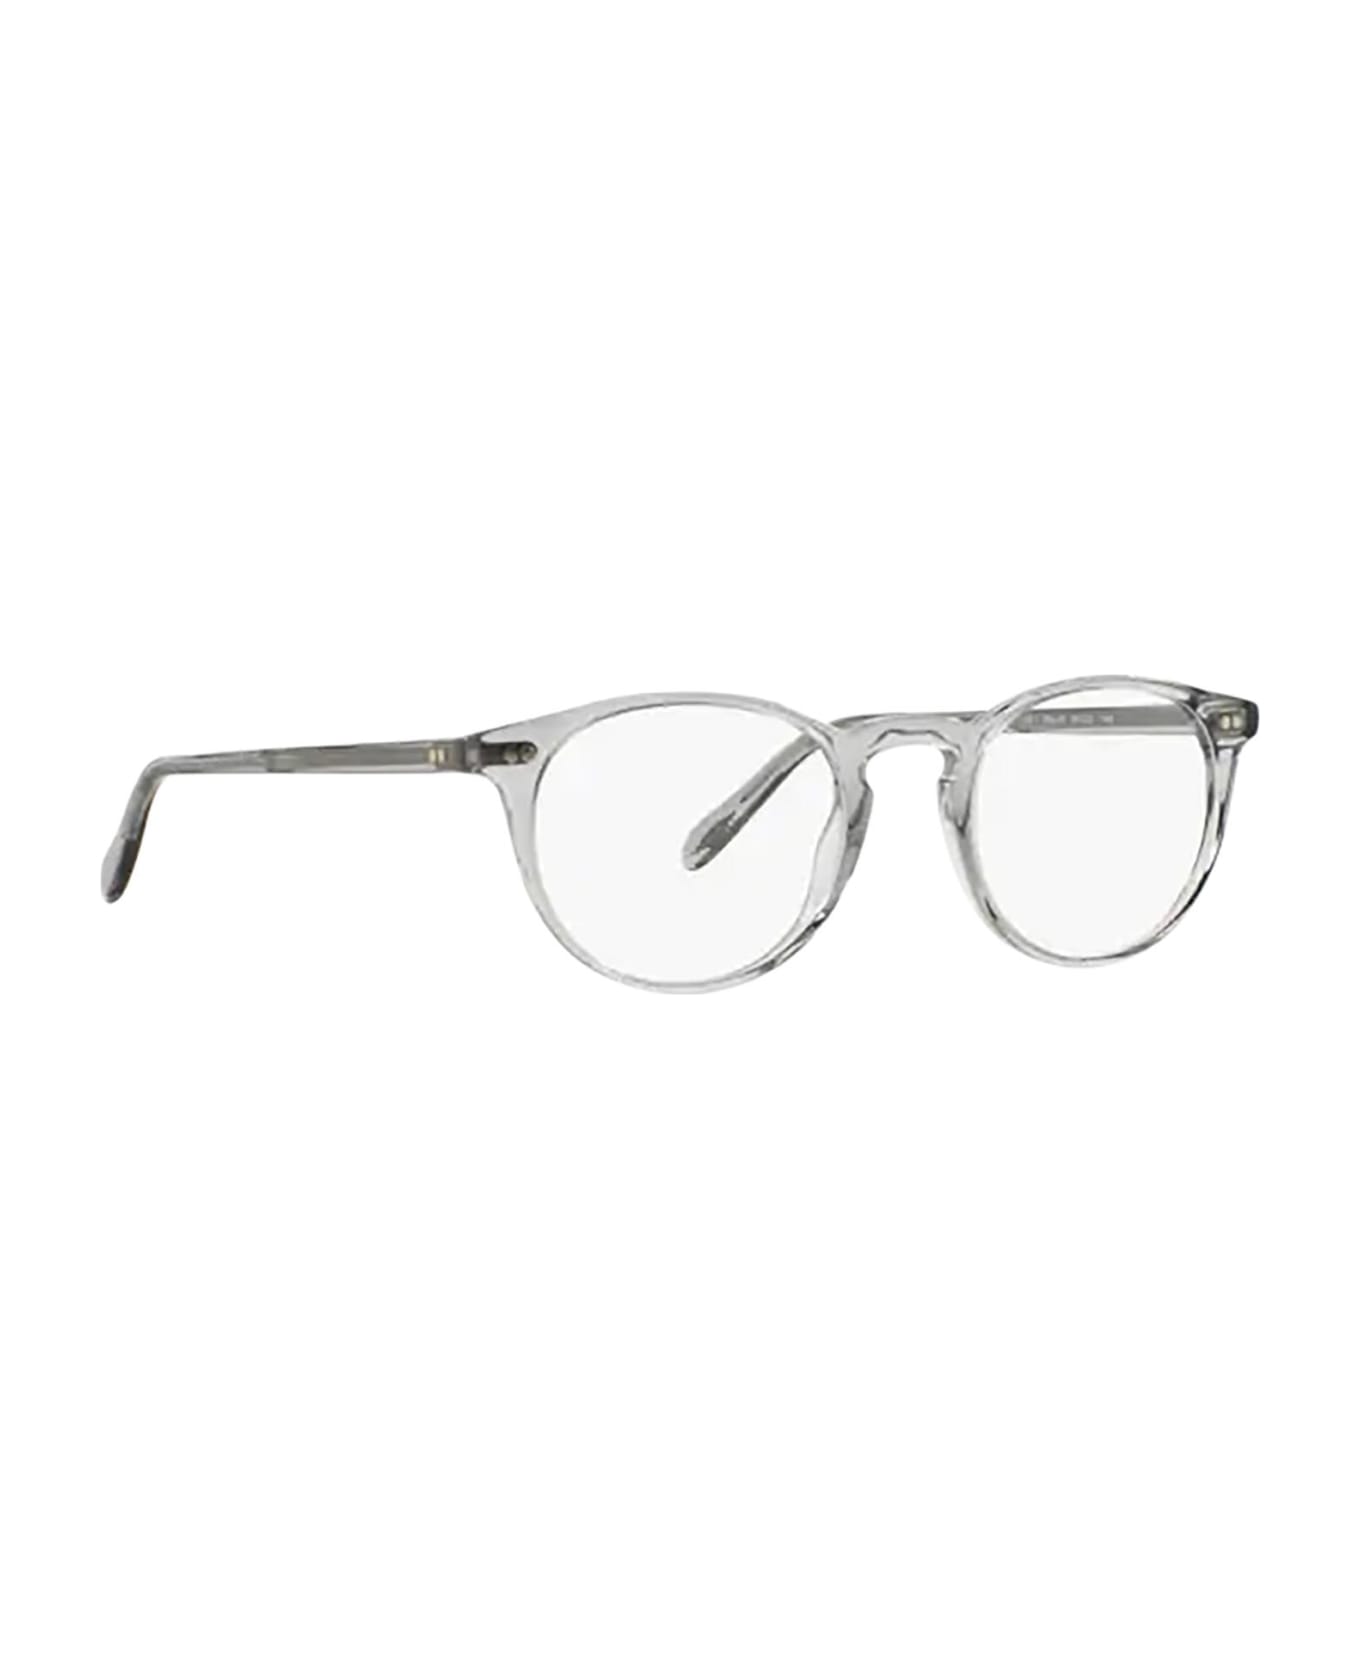 Oliver Peoples Ov5004 Workman Grey Glasses - Workman Grey